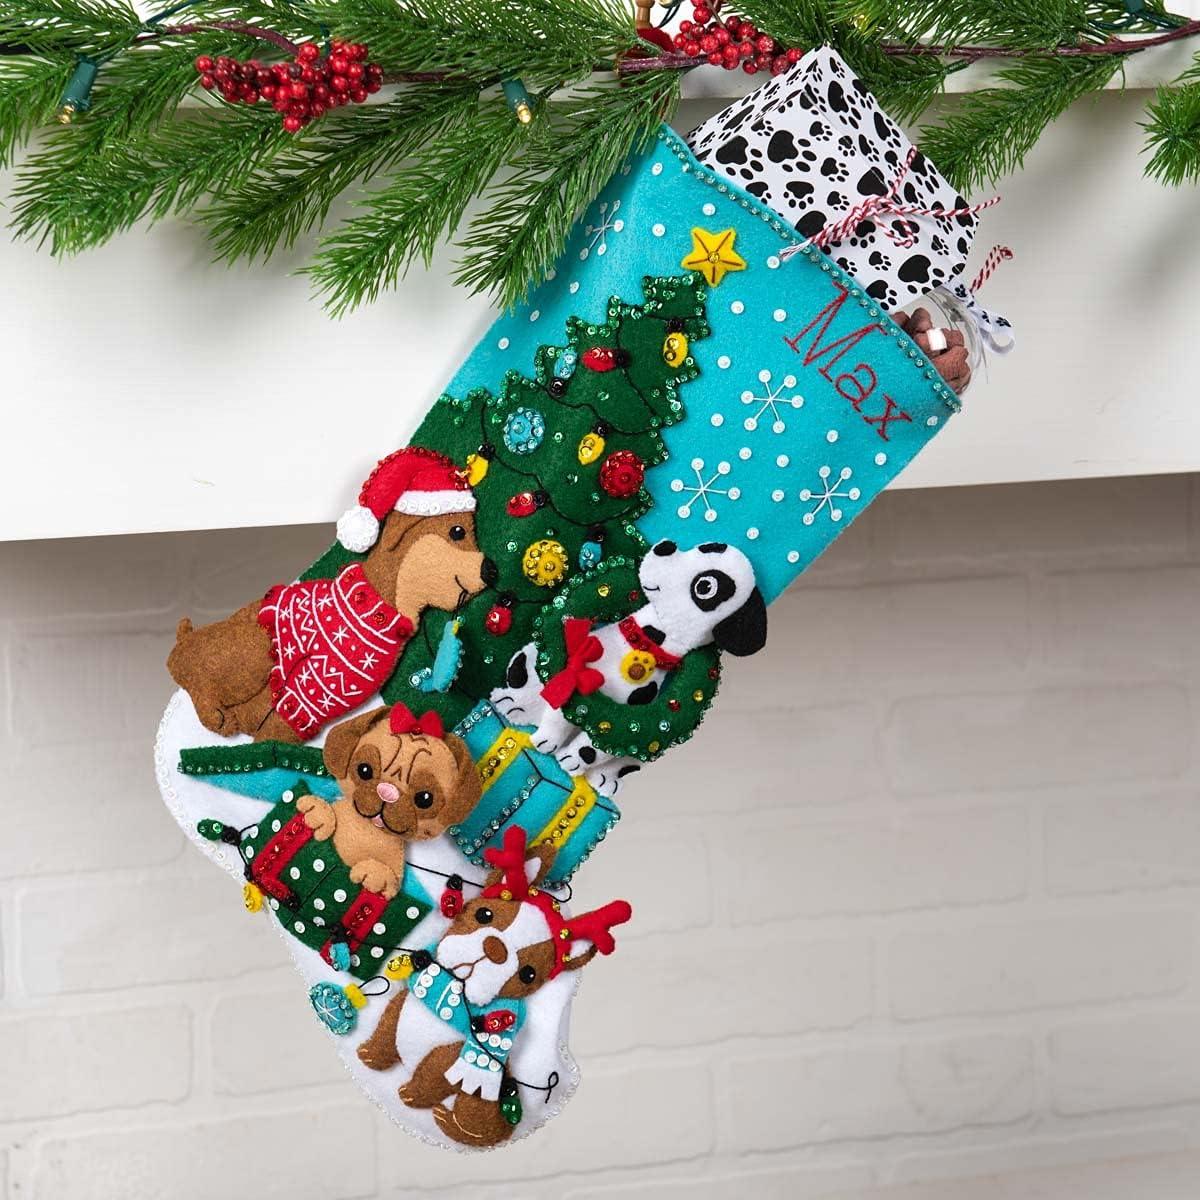 Bucilla Felt Applique Christmas Stocking Kit: Holiday Decorating